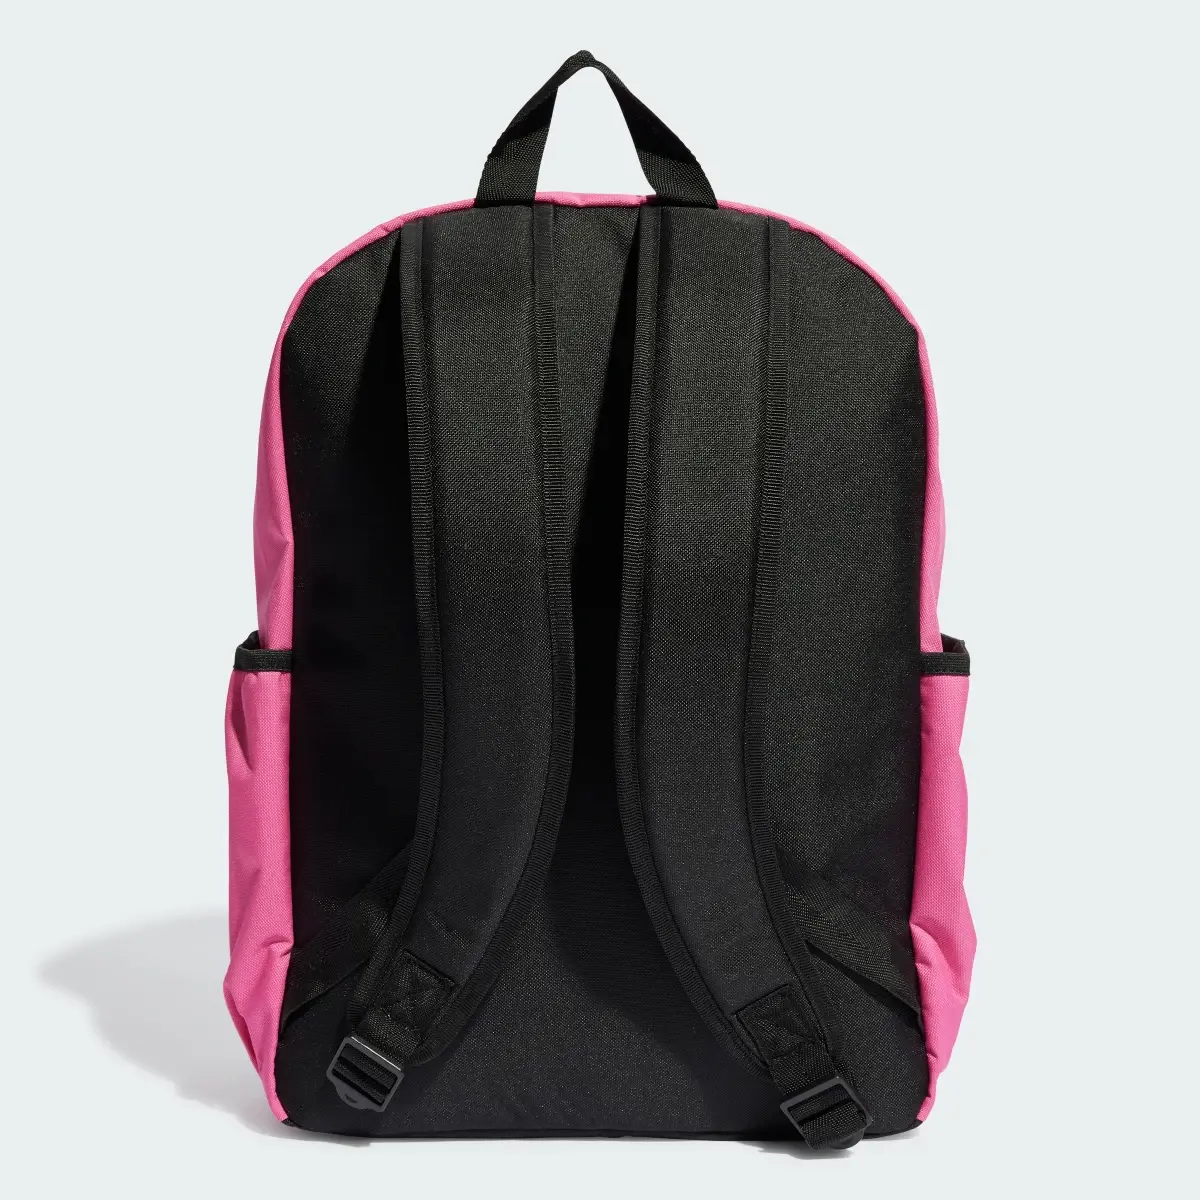 Adidas Animal Classic Backpack. 3